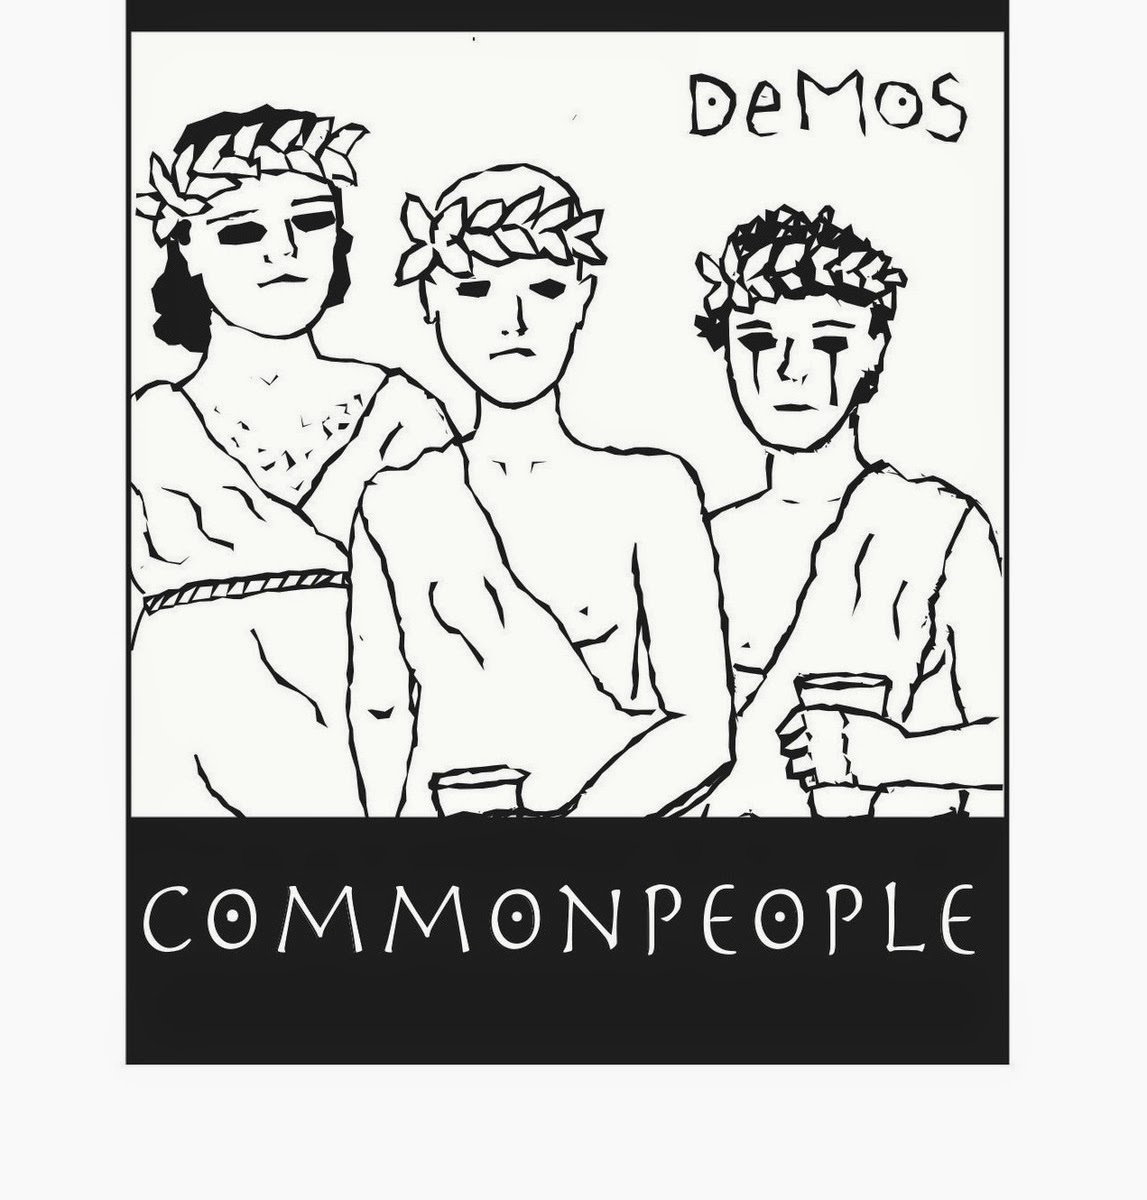 American Pancake: The Vibekills - Common People (Demos) EP 